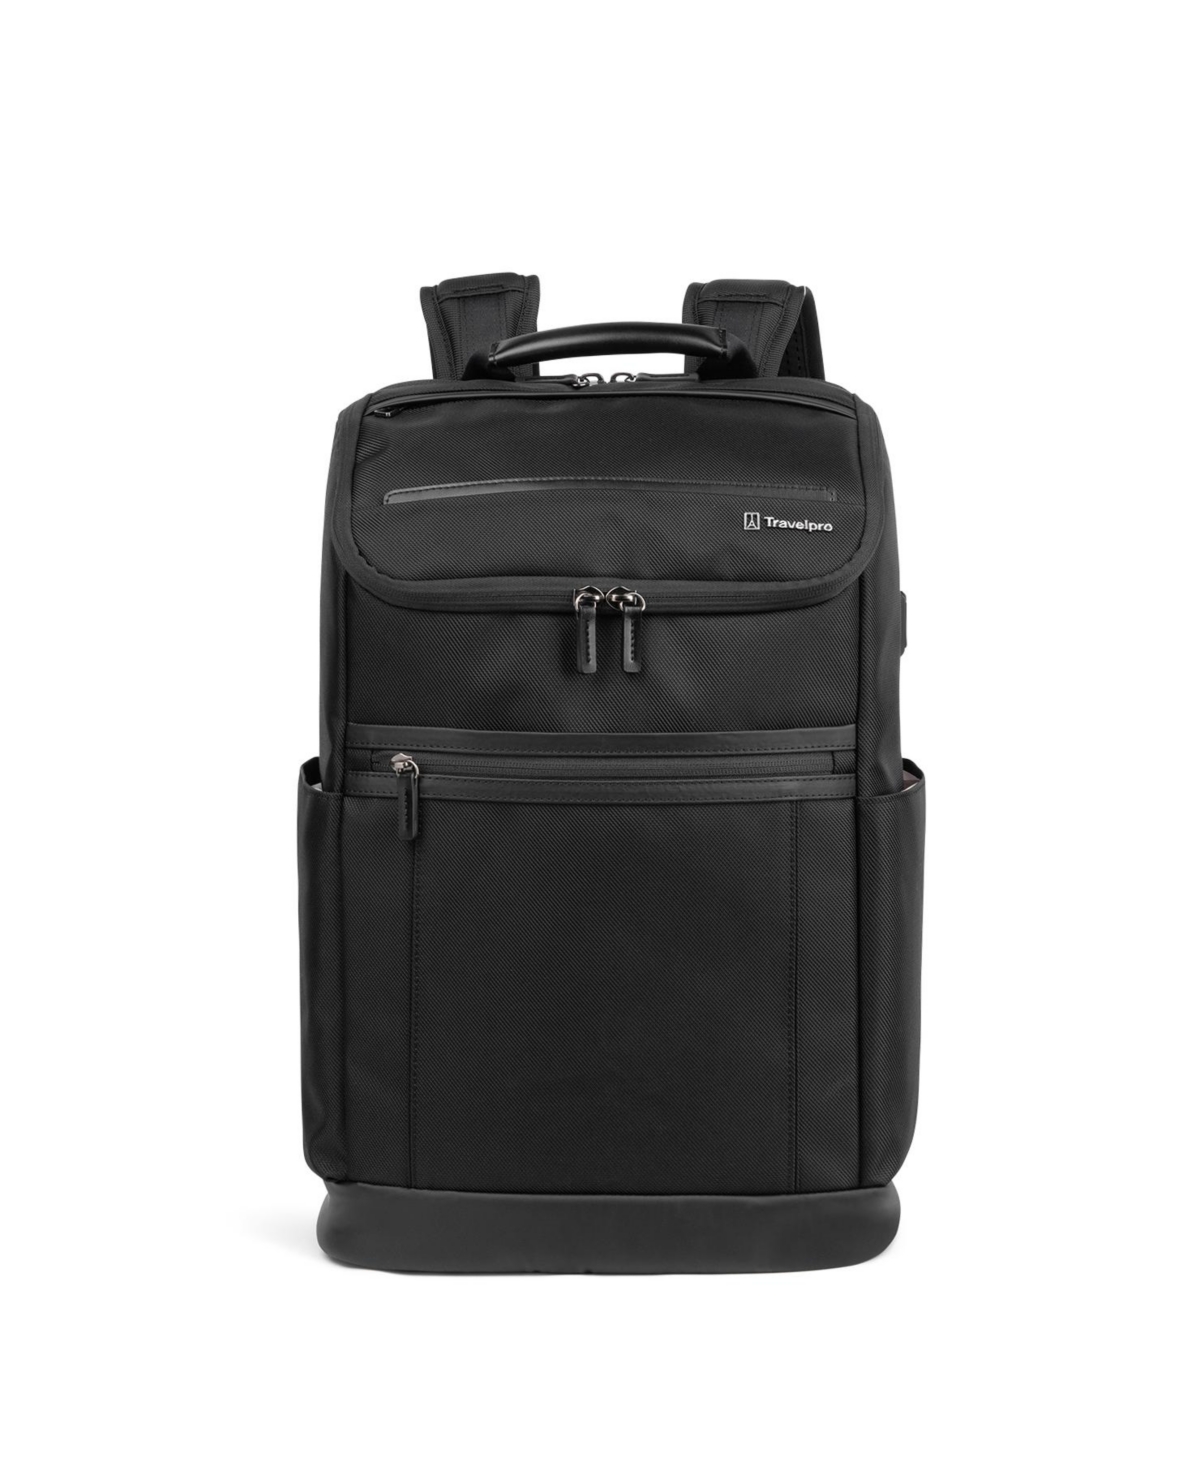 Crew Executive Choice 3 Medium Top Load Backpack - Jet Black